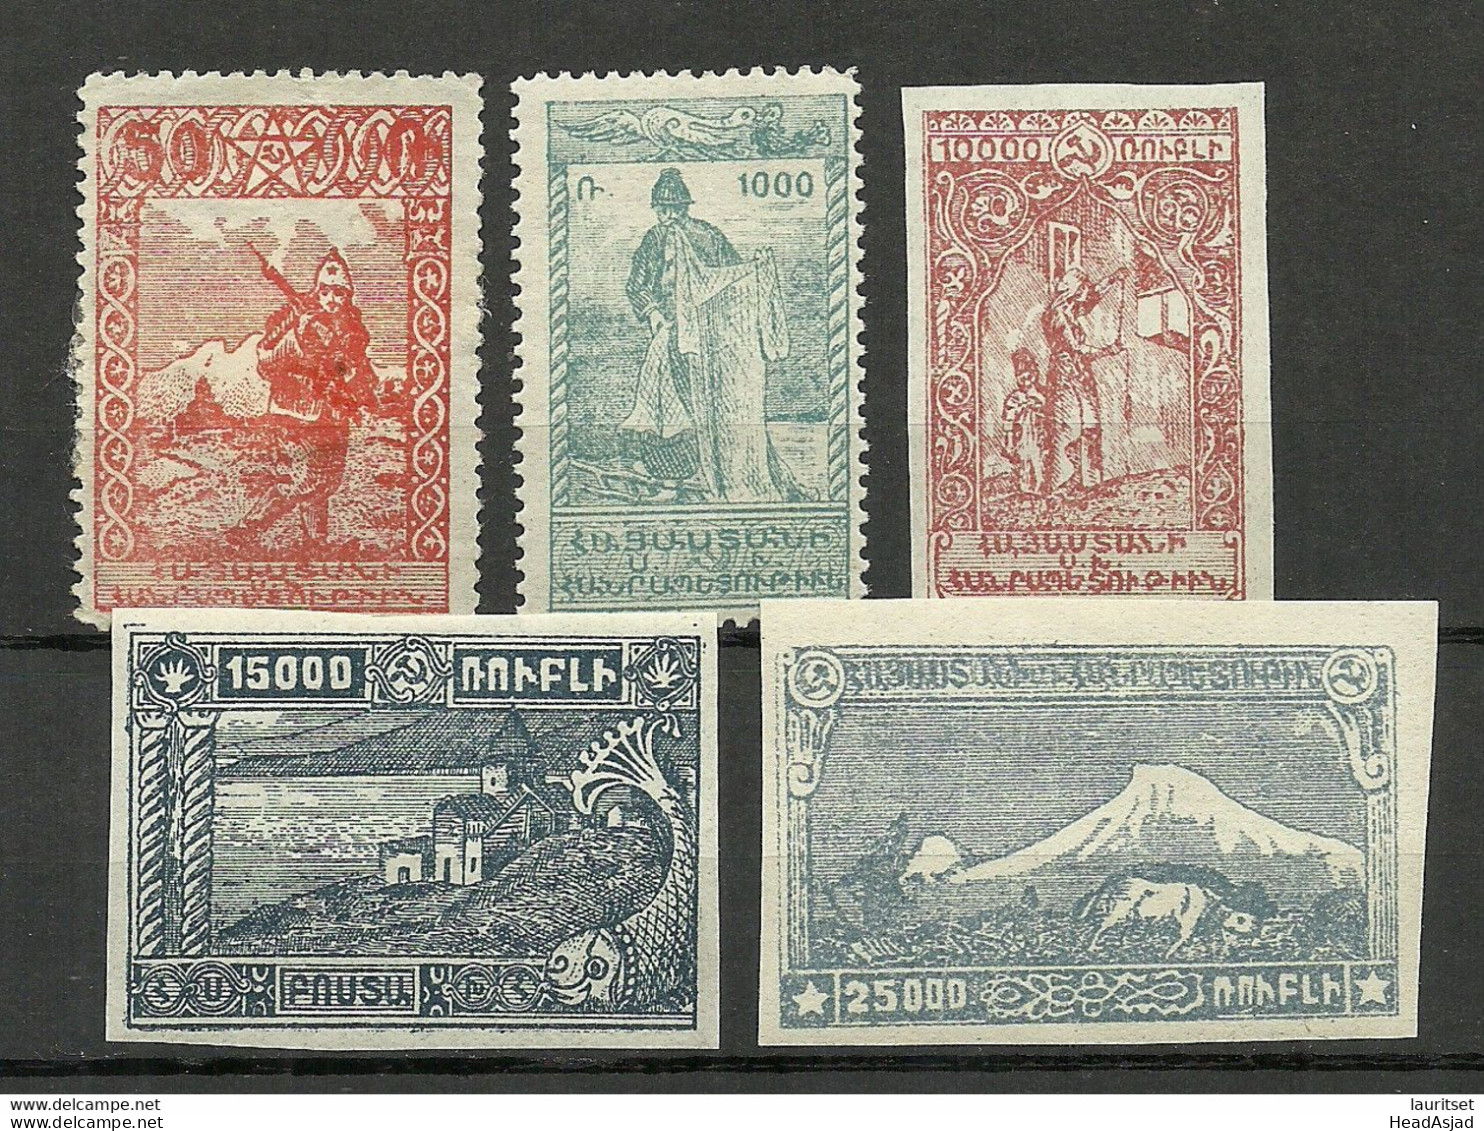 ARMENIEN Armenia 1921 = 5 Values From Set Michel II A - II S * - Arménie